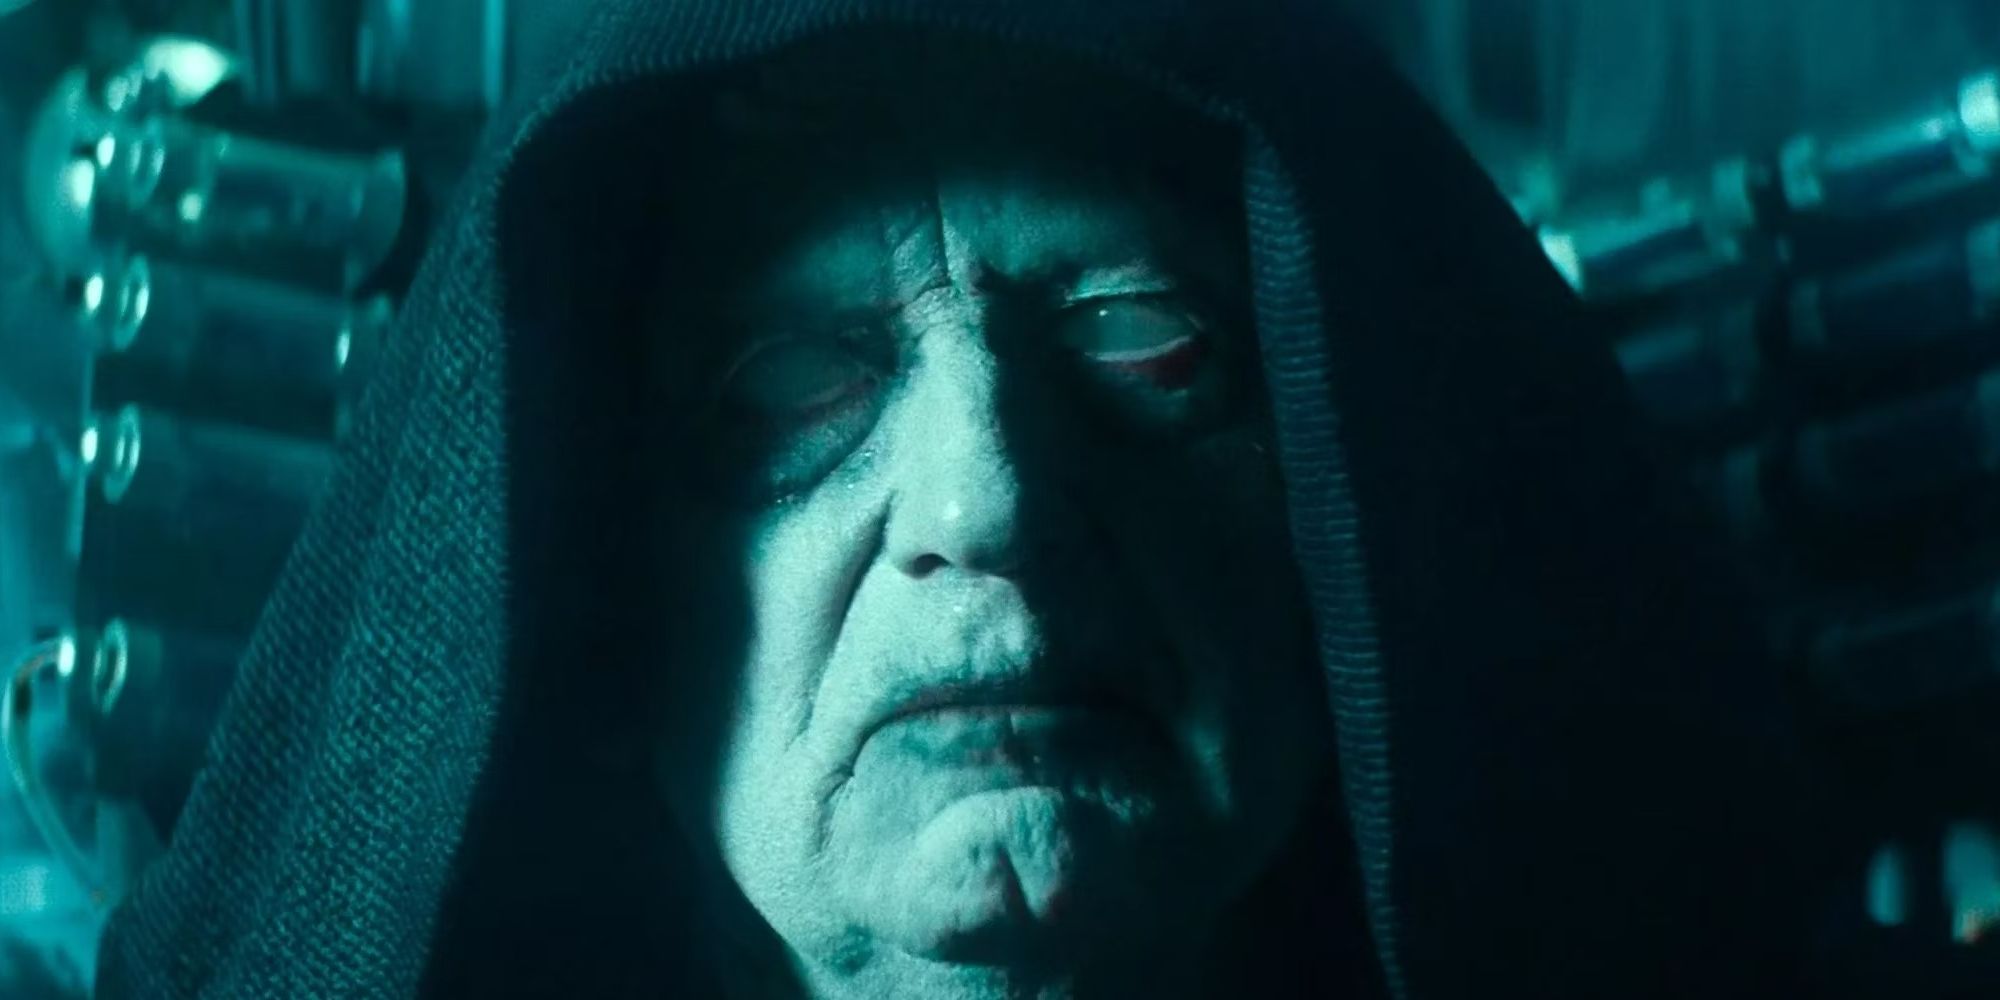 Ian McDiarmid as Emperor Palpatine in The Rise of Skywalker looking scary